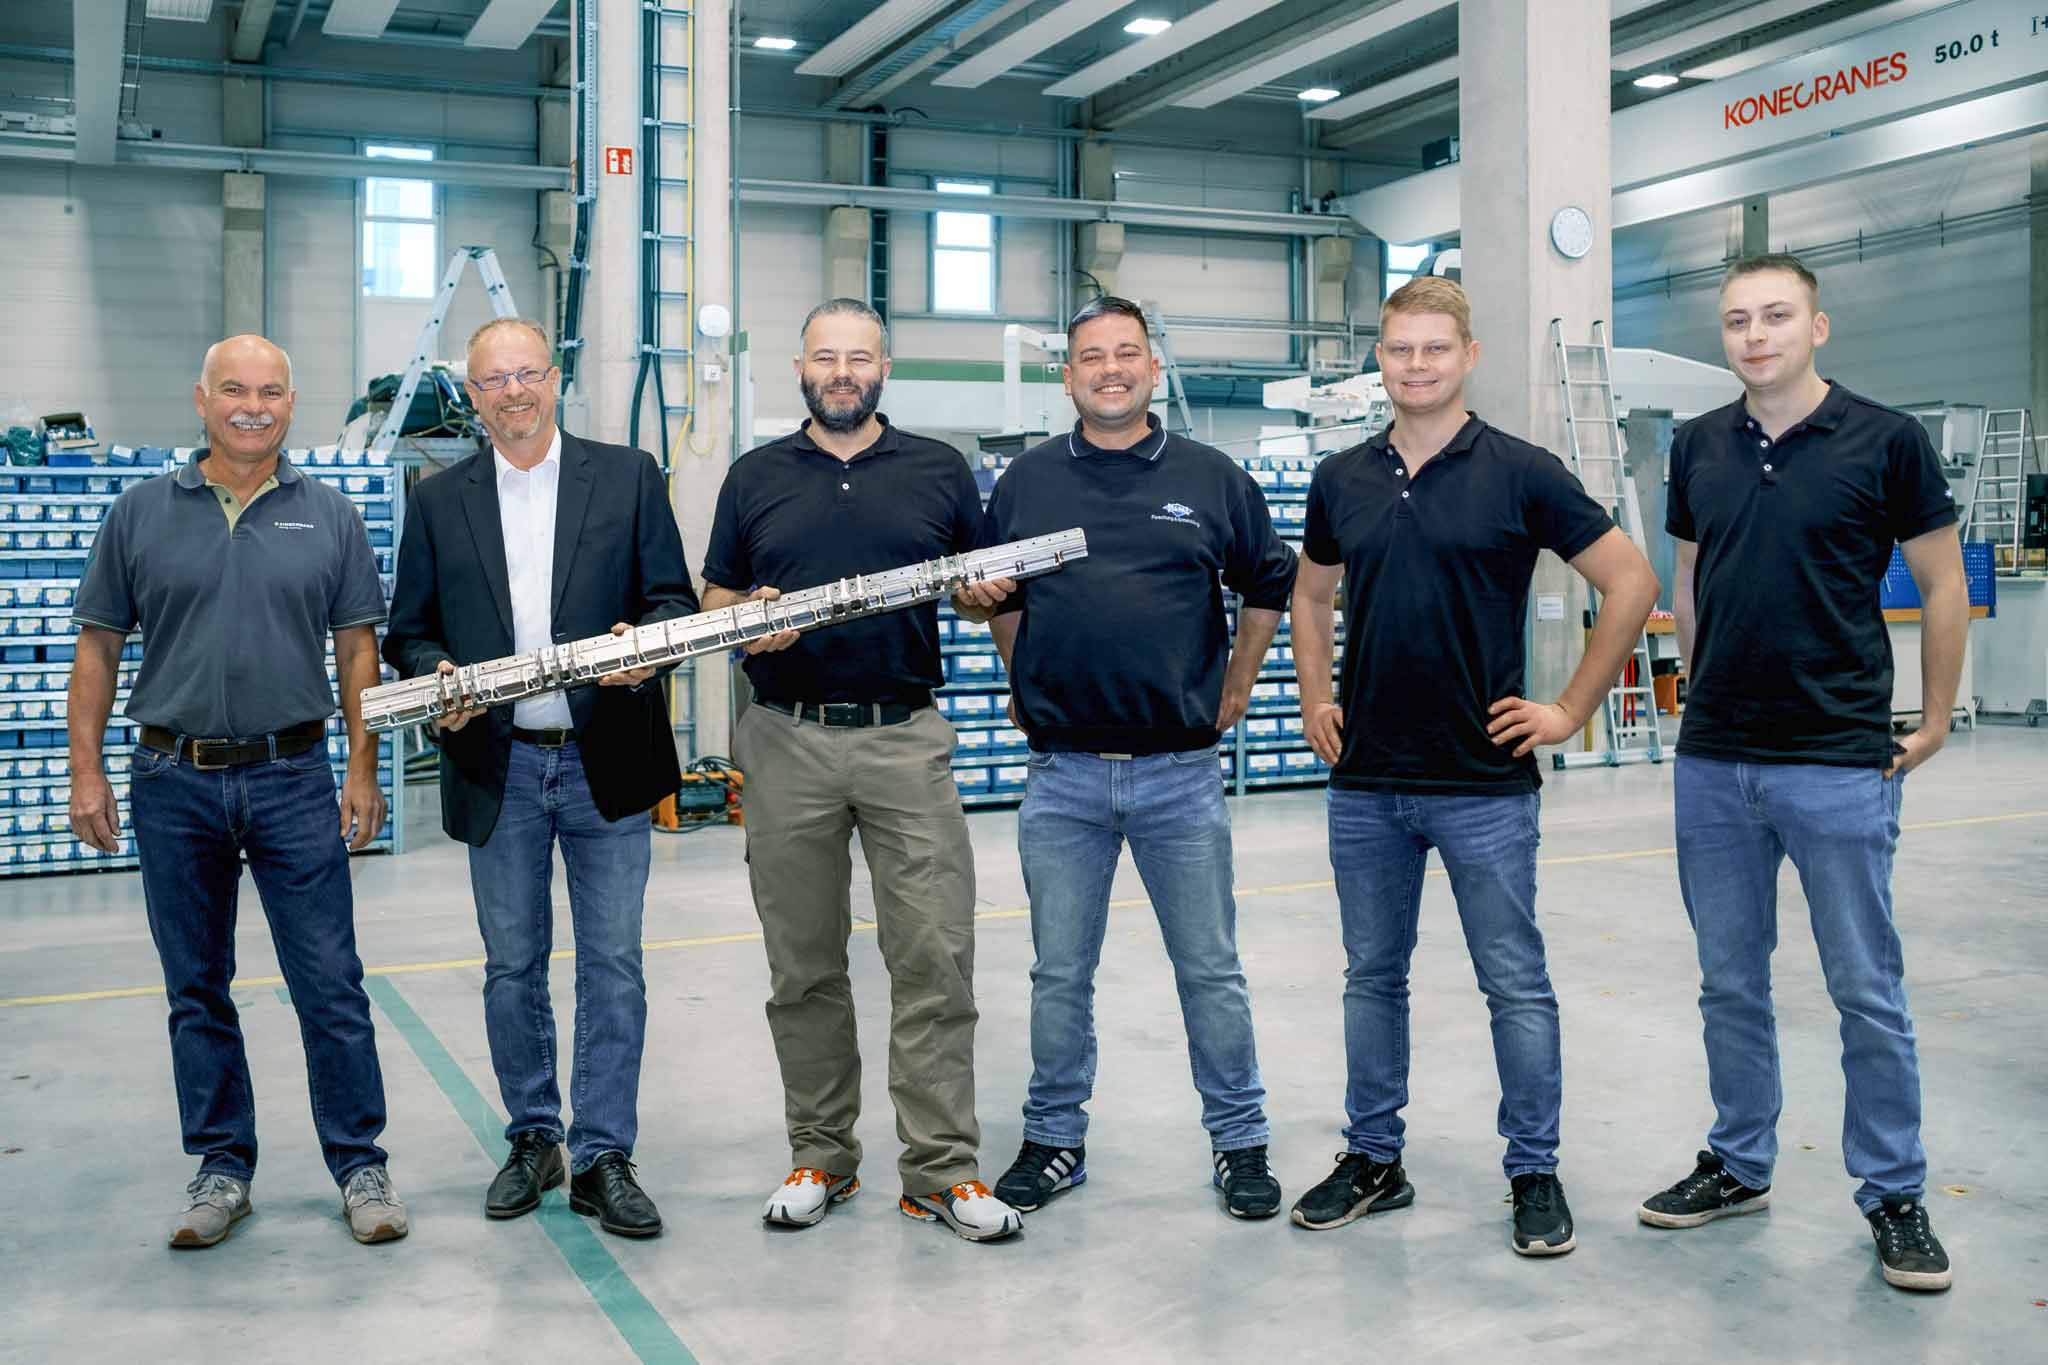 The team of Zimmermann and MAPAL responsibles: Bernd Scheurenbrand and Steffen Nüssle, as well as Jens Ilg, Andreas Rotenberger, Julian Kraus and Lukas Weiß.